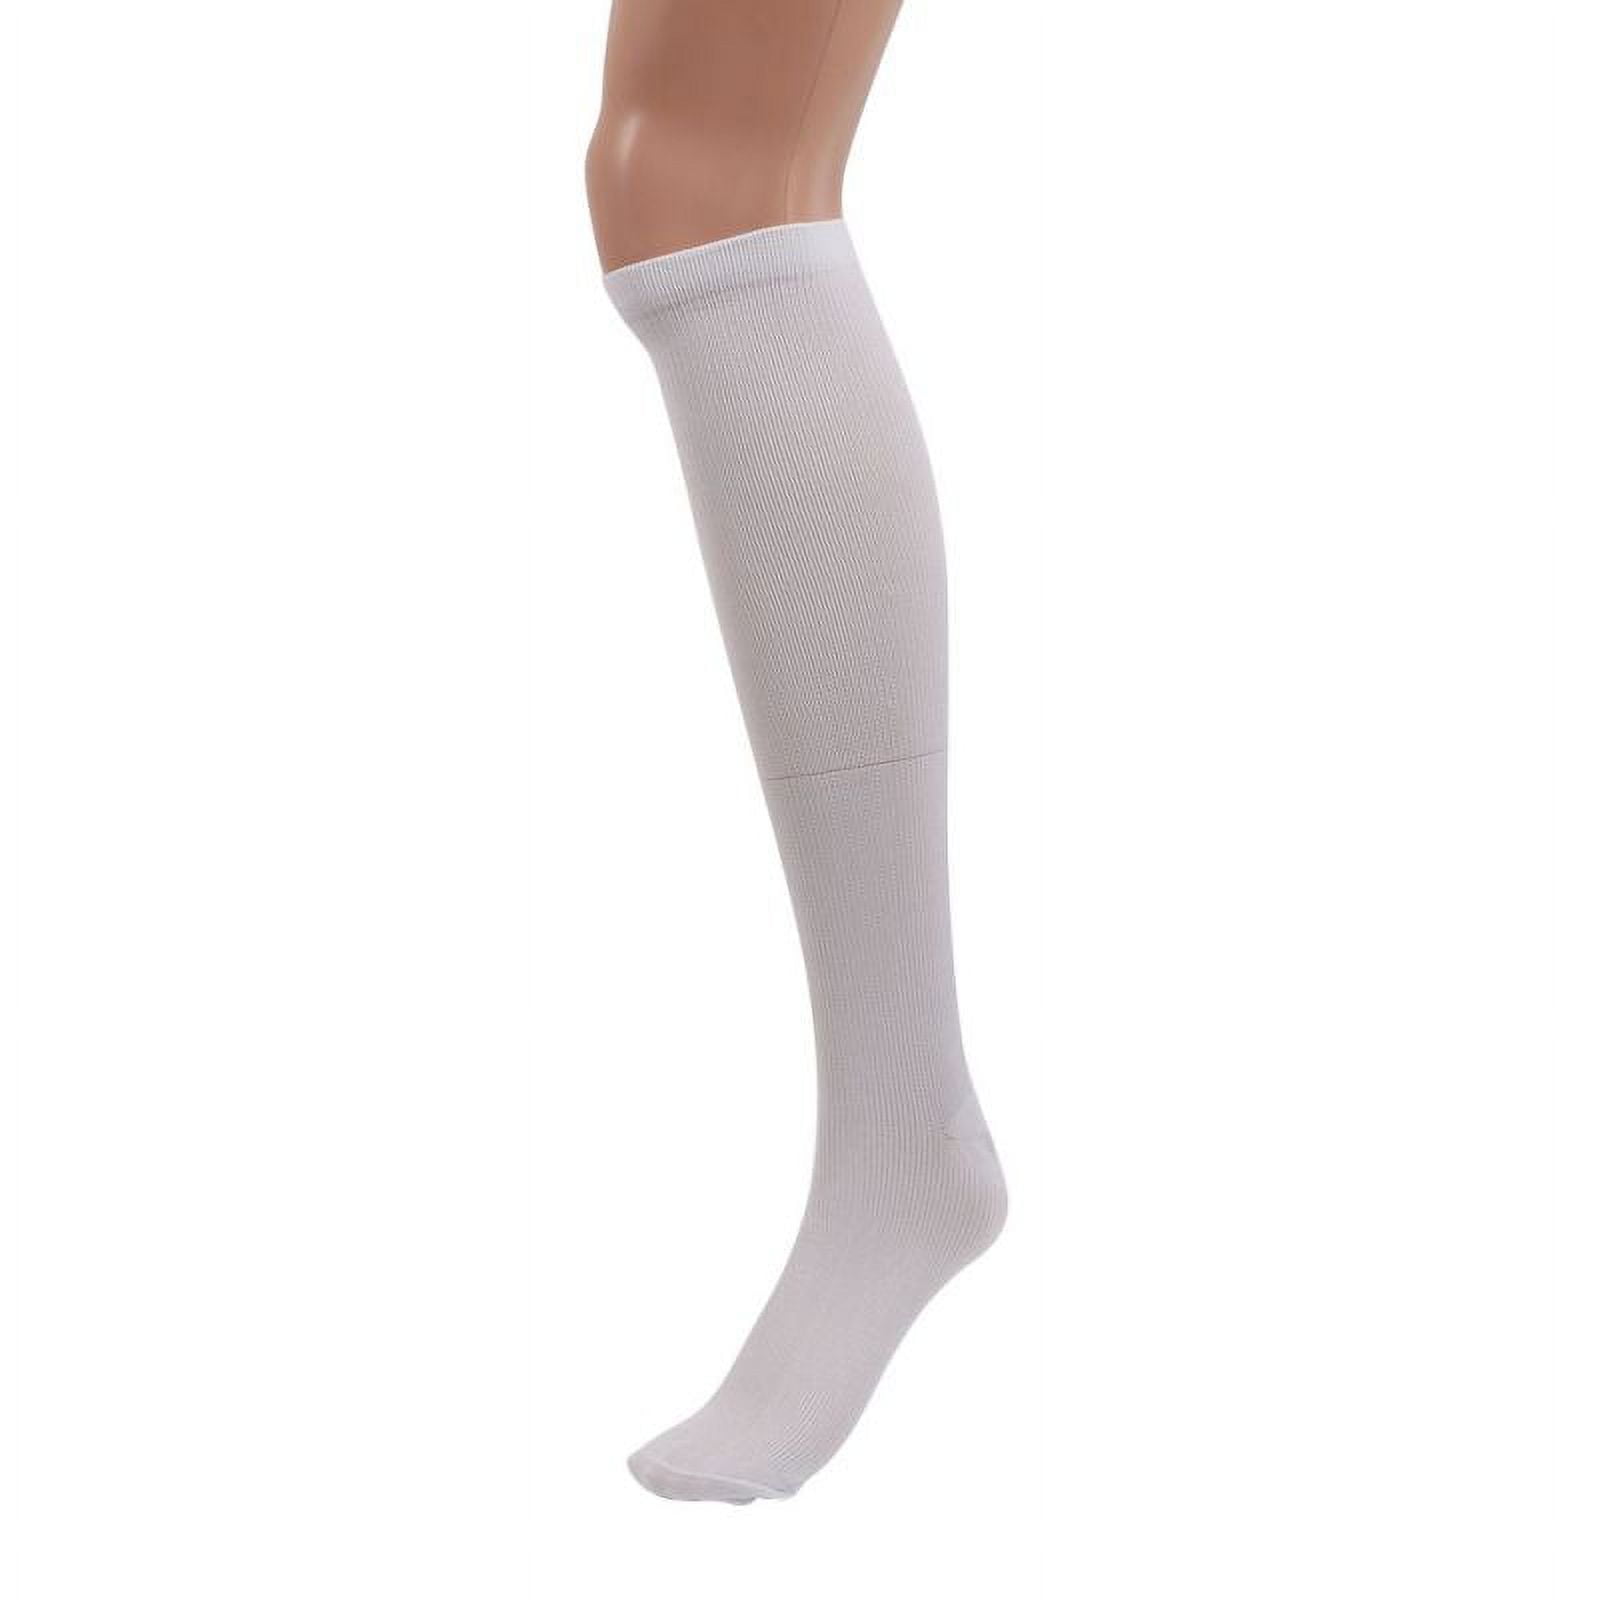 1 Pair Knee High Graduated Compression Socks for Men & Women - BEST  Stockings for Running, Medical, Athletic, Diabetic, Swelling, Varicose Veins,  Travel, Pregnancy, Shin Splints, Nurse 